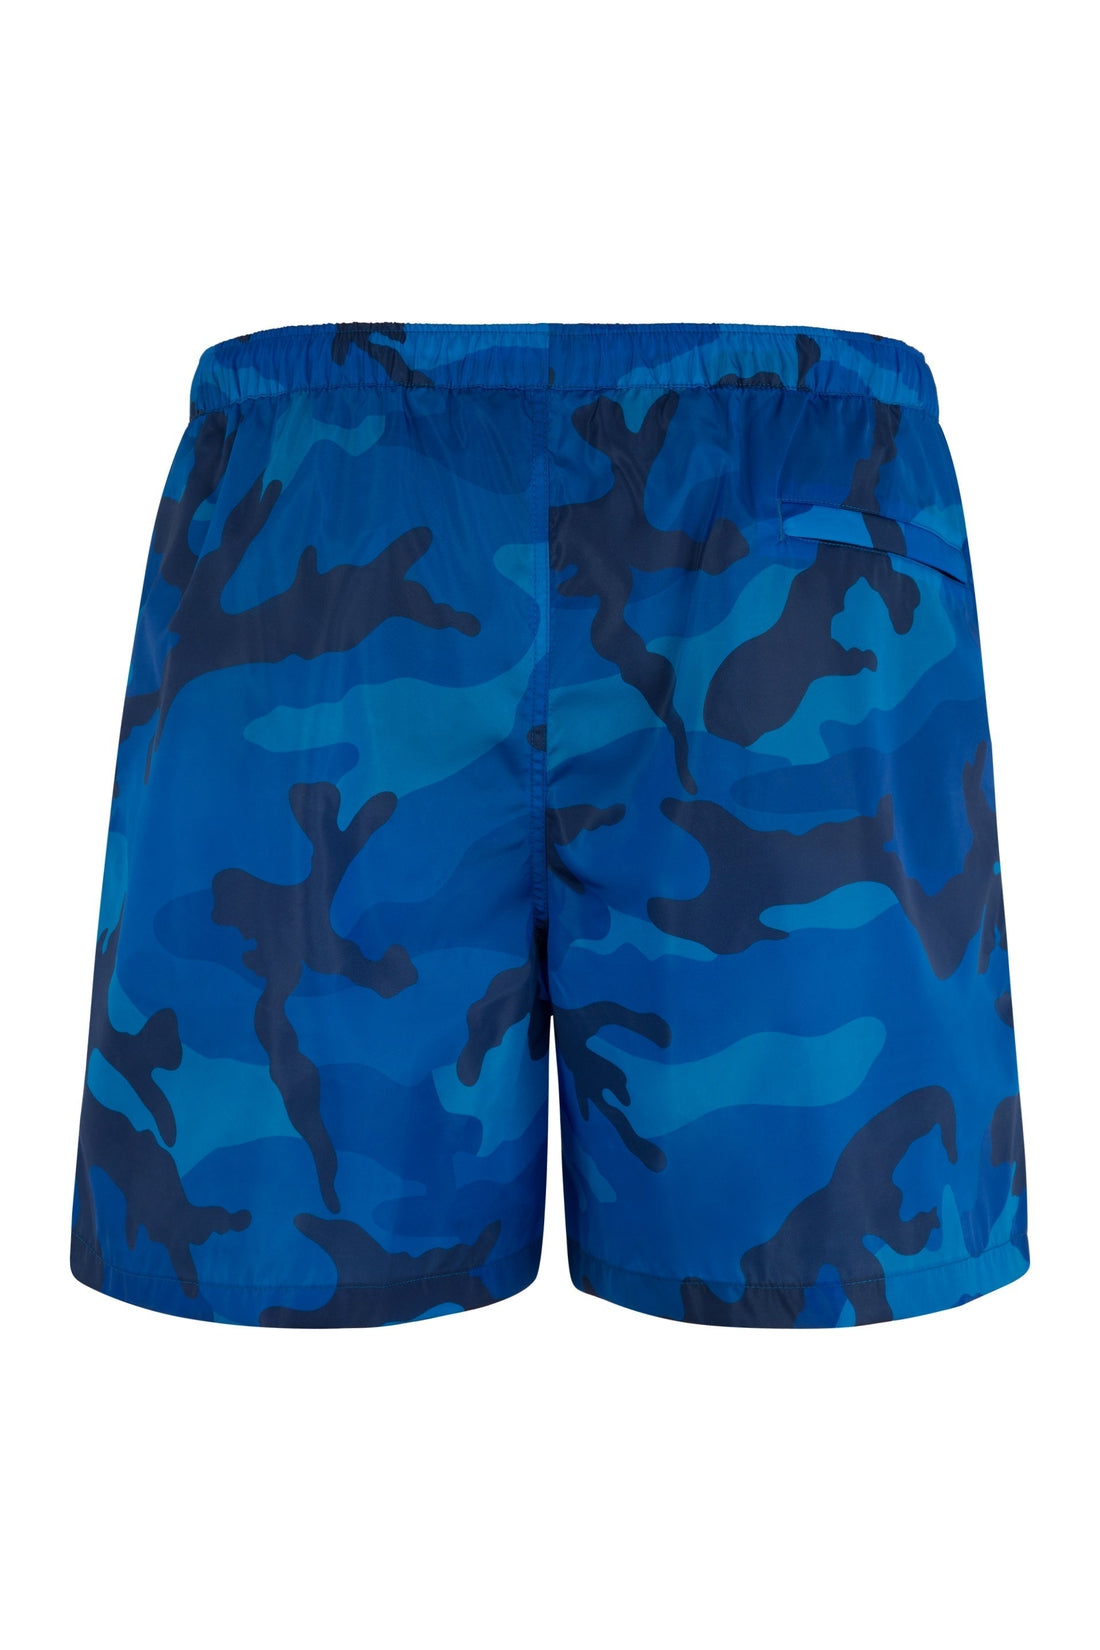 Valentino-OUTLET-SALE-Printed swim shorts-ARCHIVIST